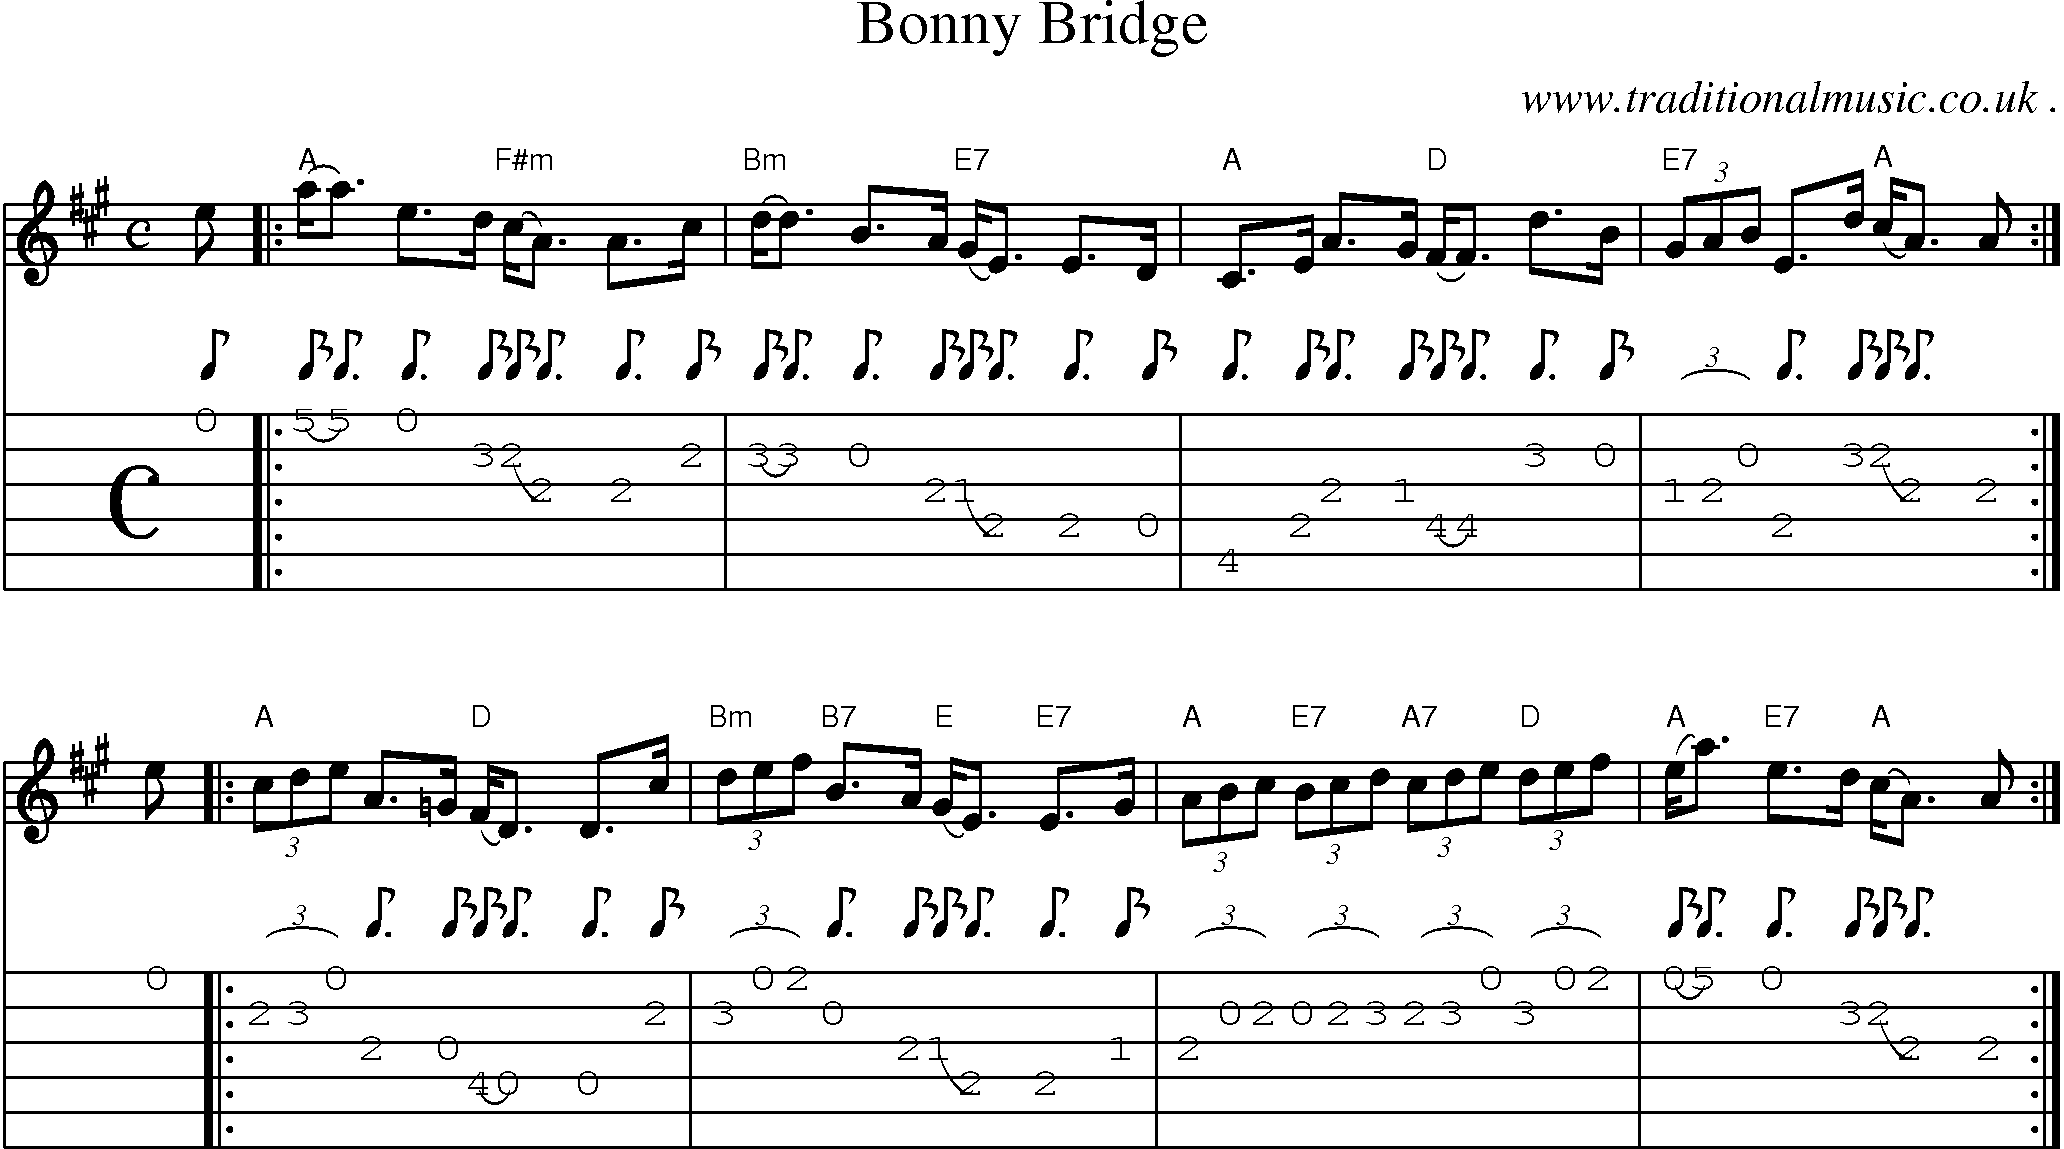 Sheet-music  score, Chords and Guitar Tabs for Bonny Bridge